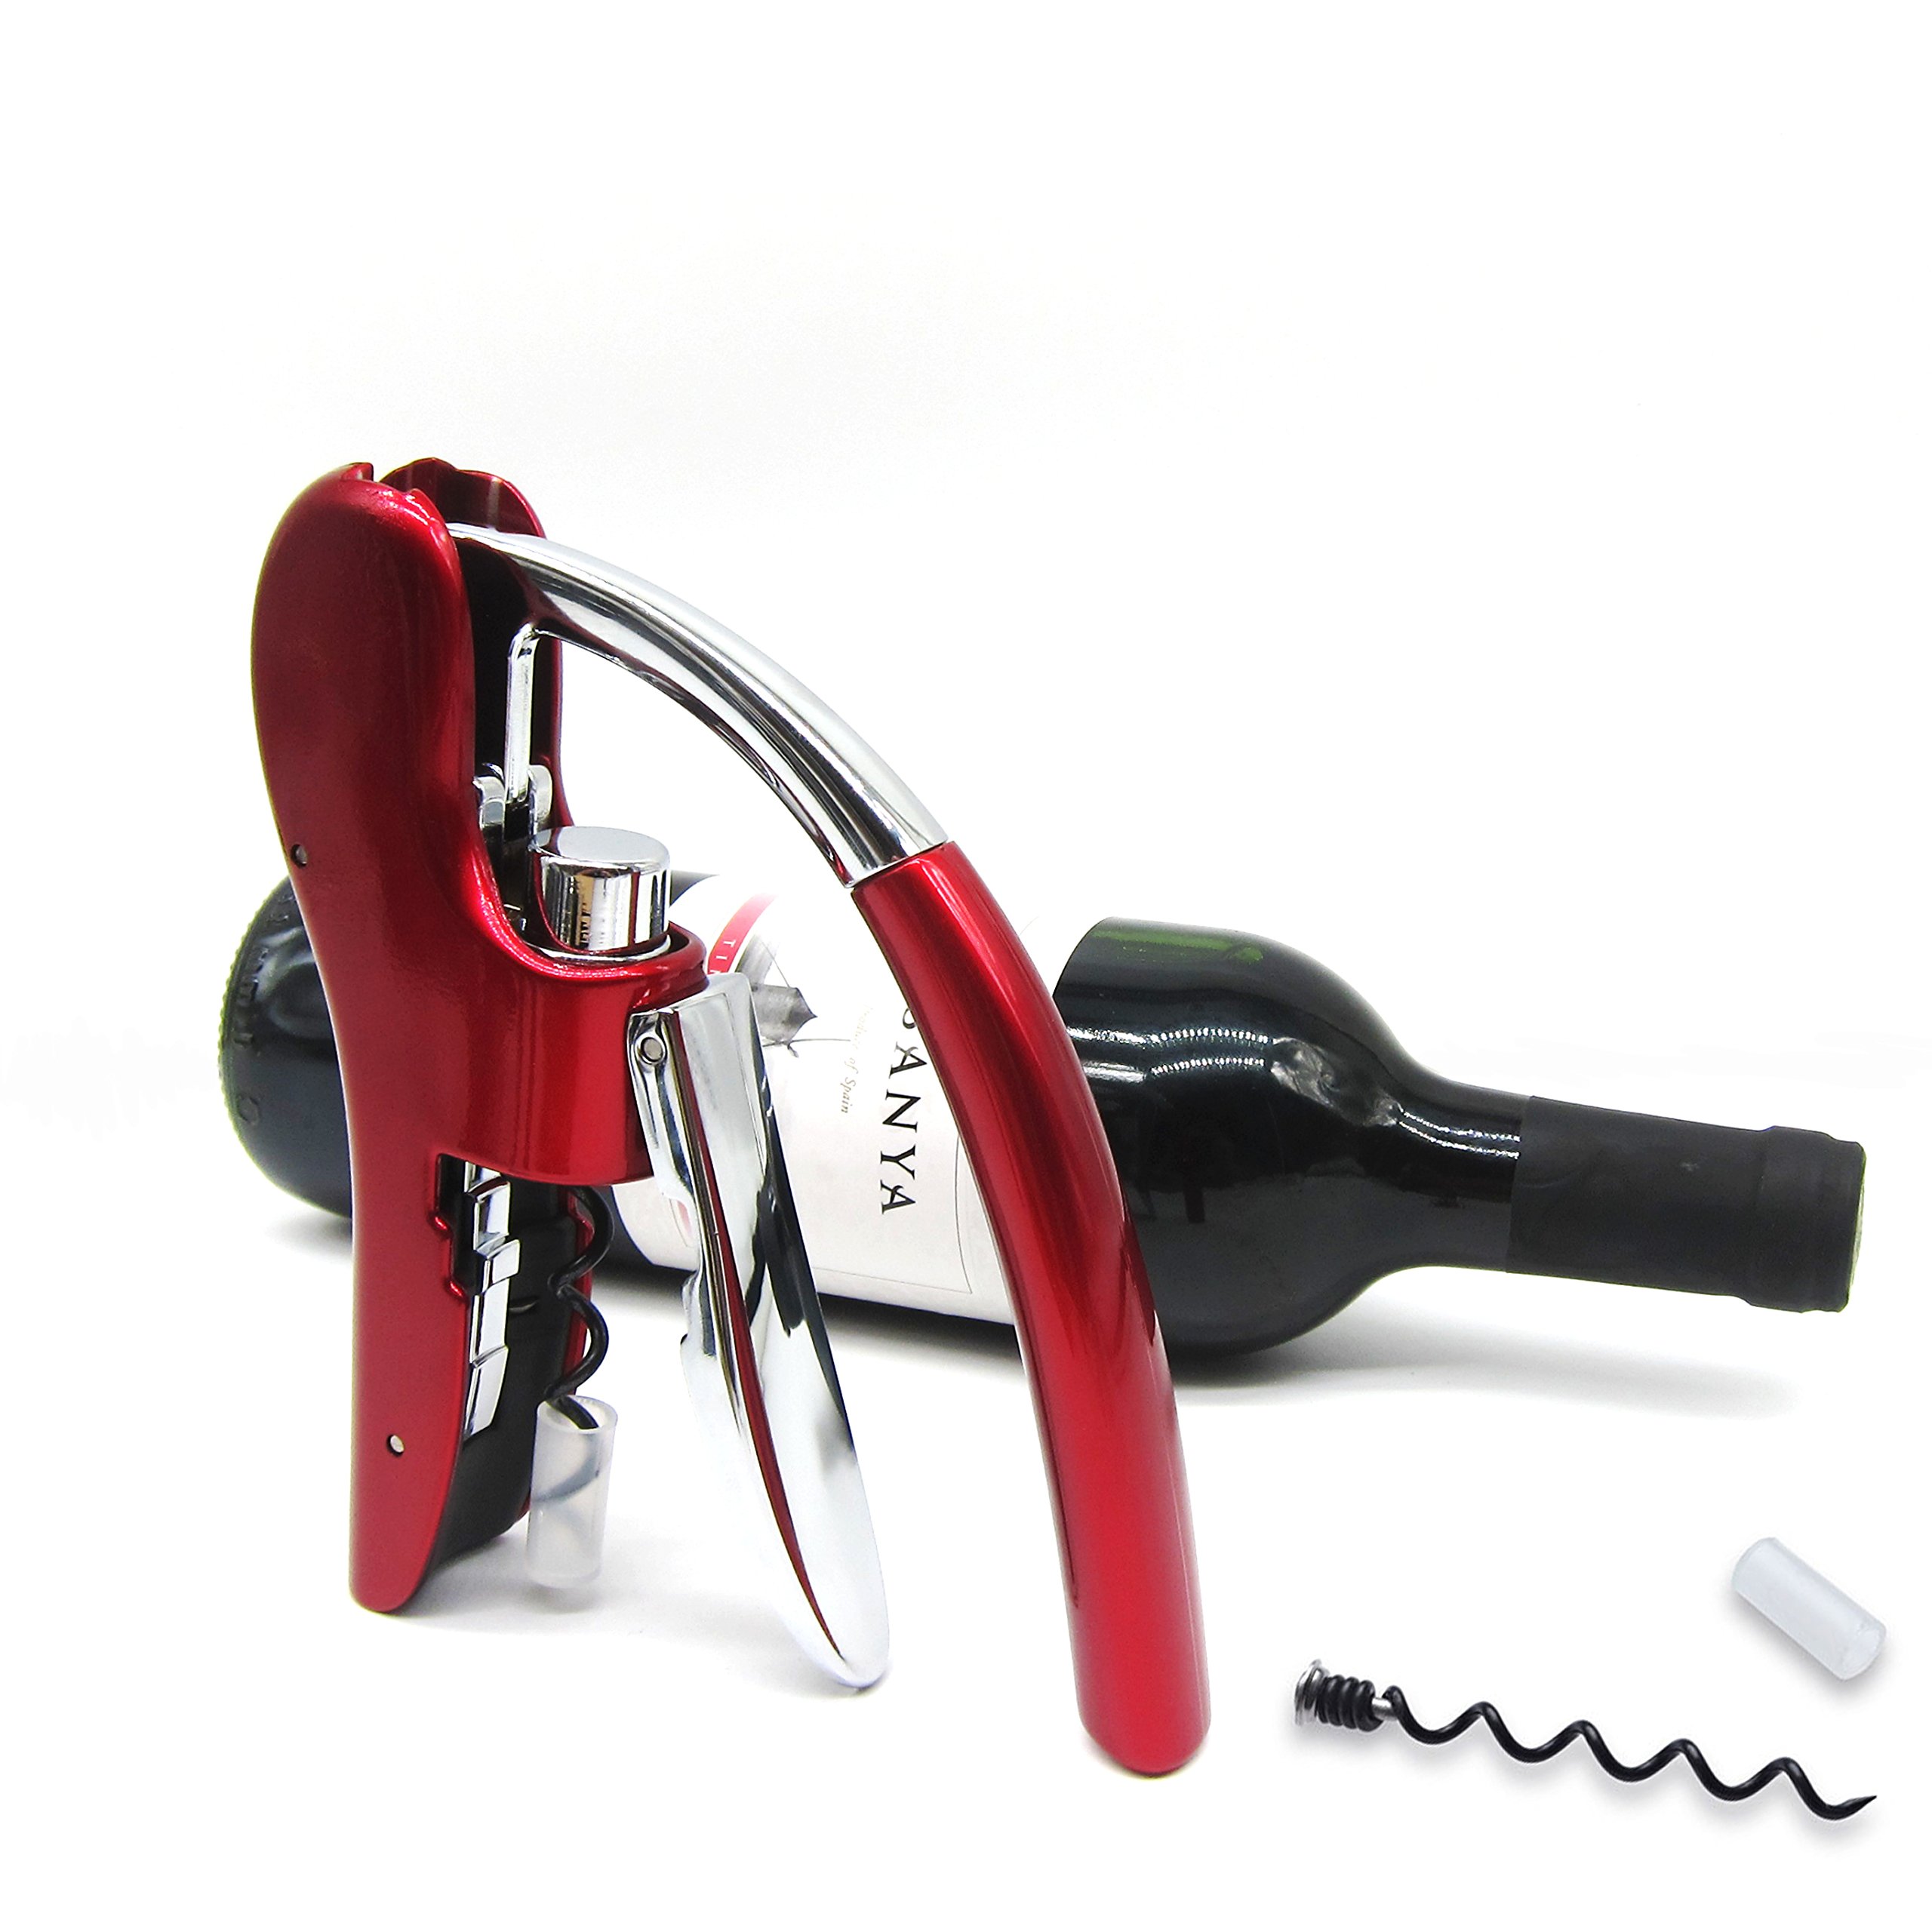 KAYCROWN Wine Bottle Opener, Vertical Lever Corkscrew with Built in Foil Cutter Design, Manual Handheld Corkscrew with Ergonomic Lever Pump